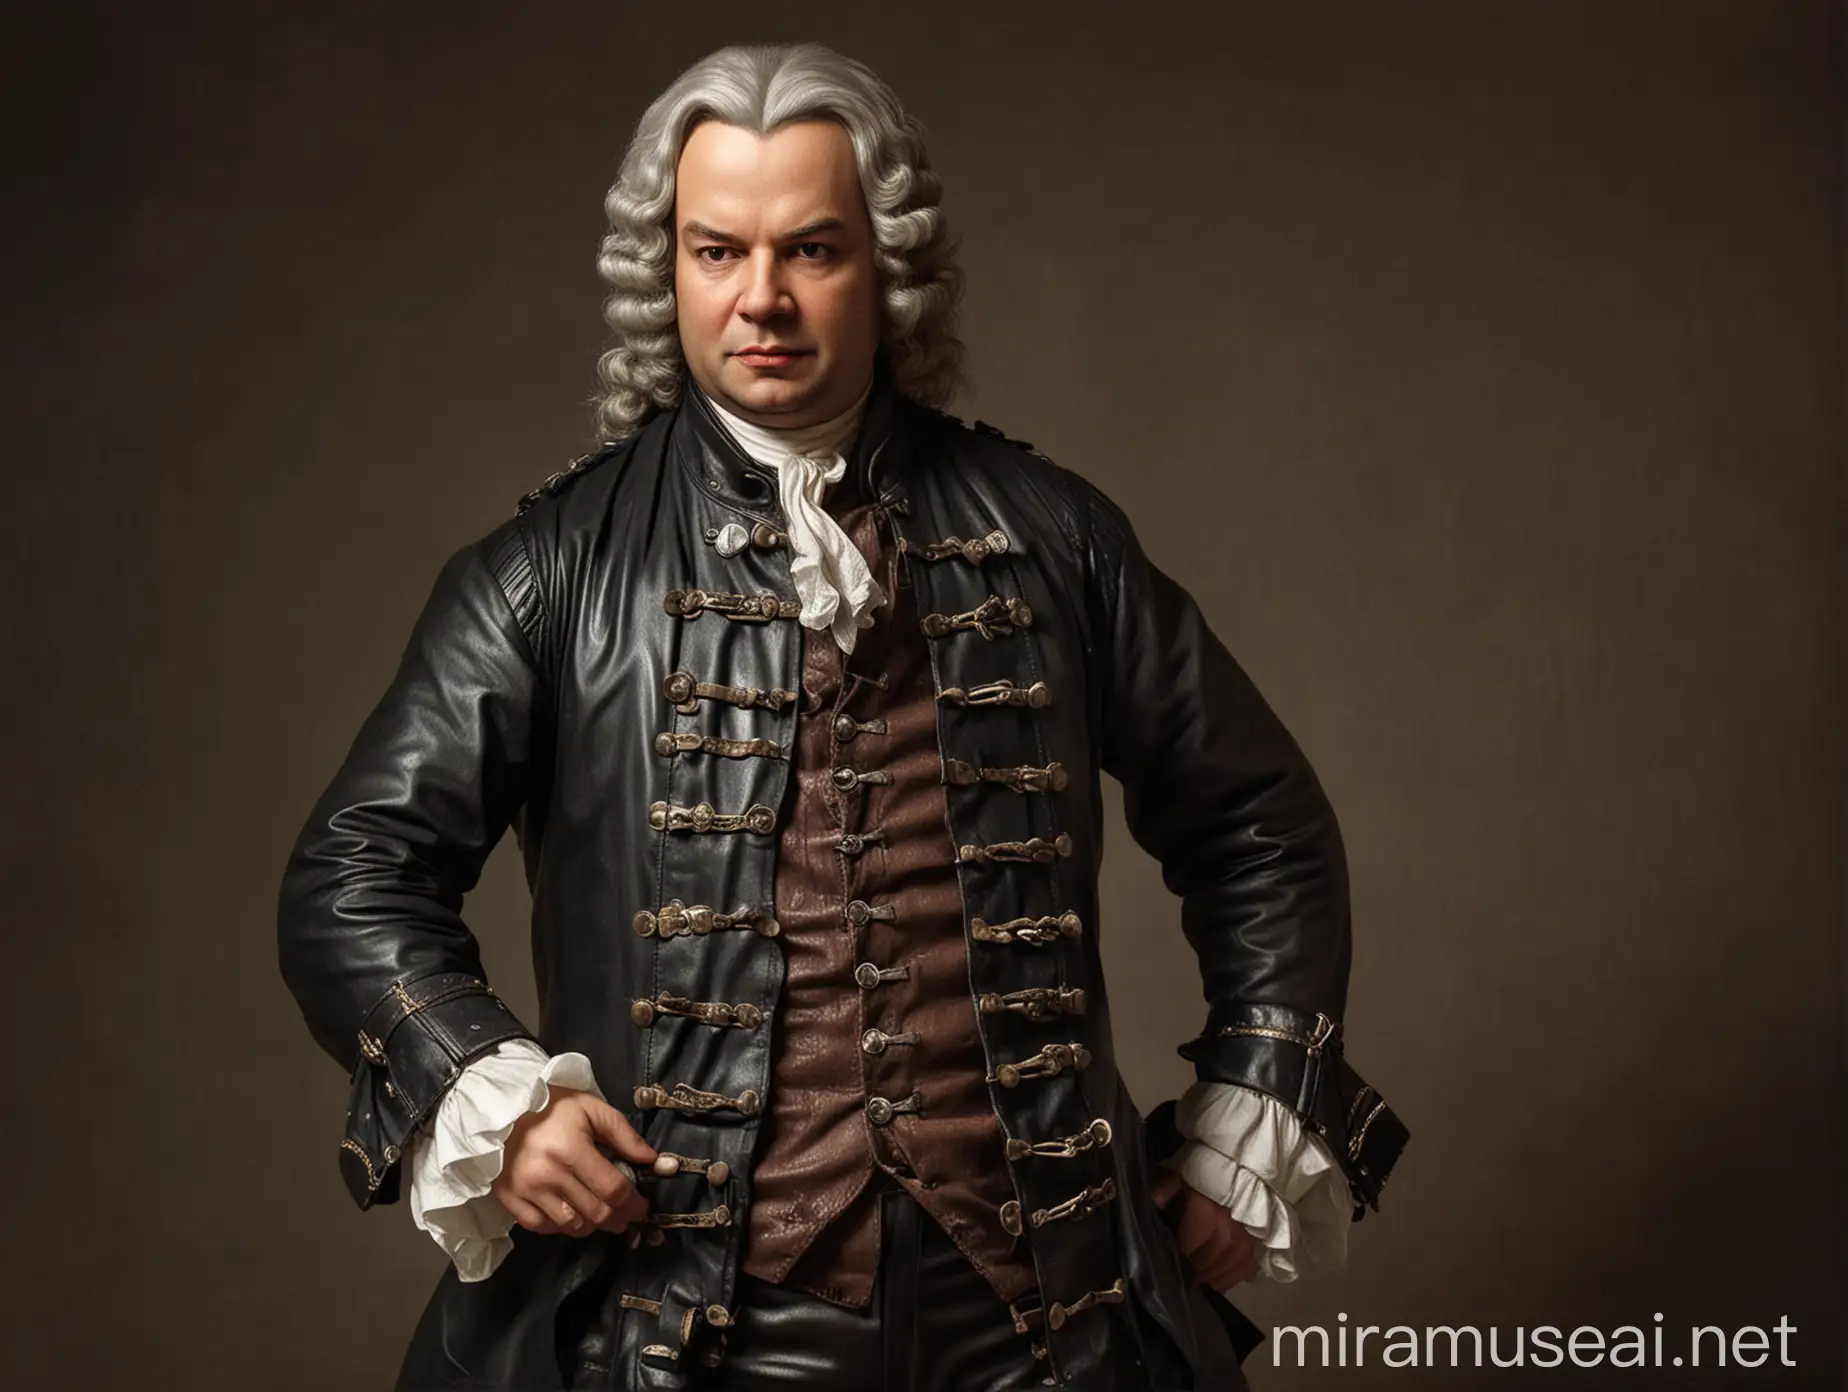 Johann Sebastian Bach dressed in leather